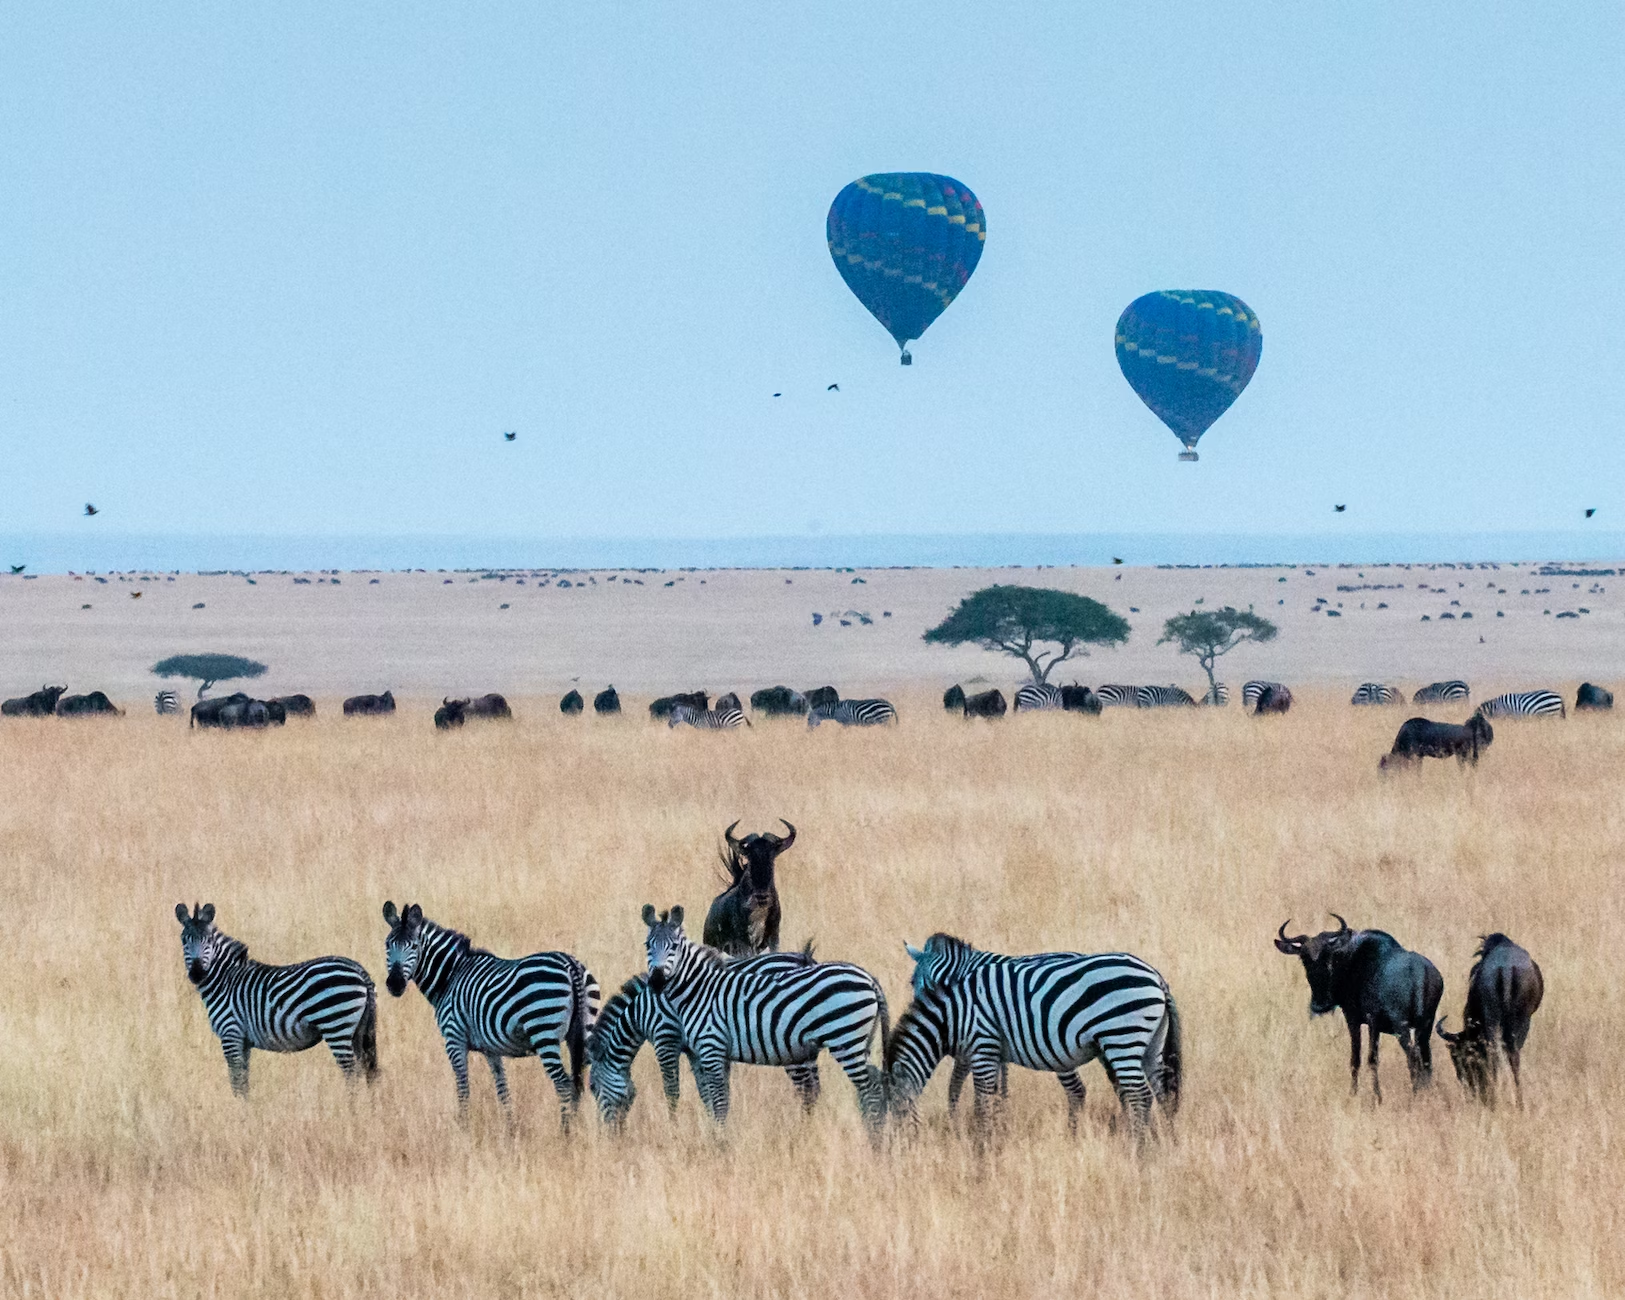 Maasai Mara National Reserve, Kenya wildlife safari